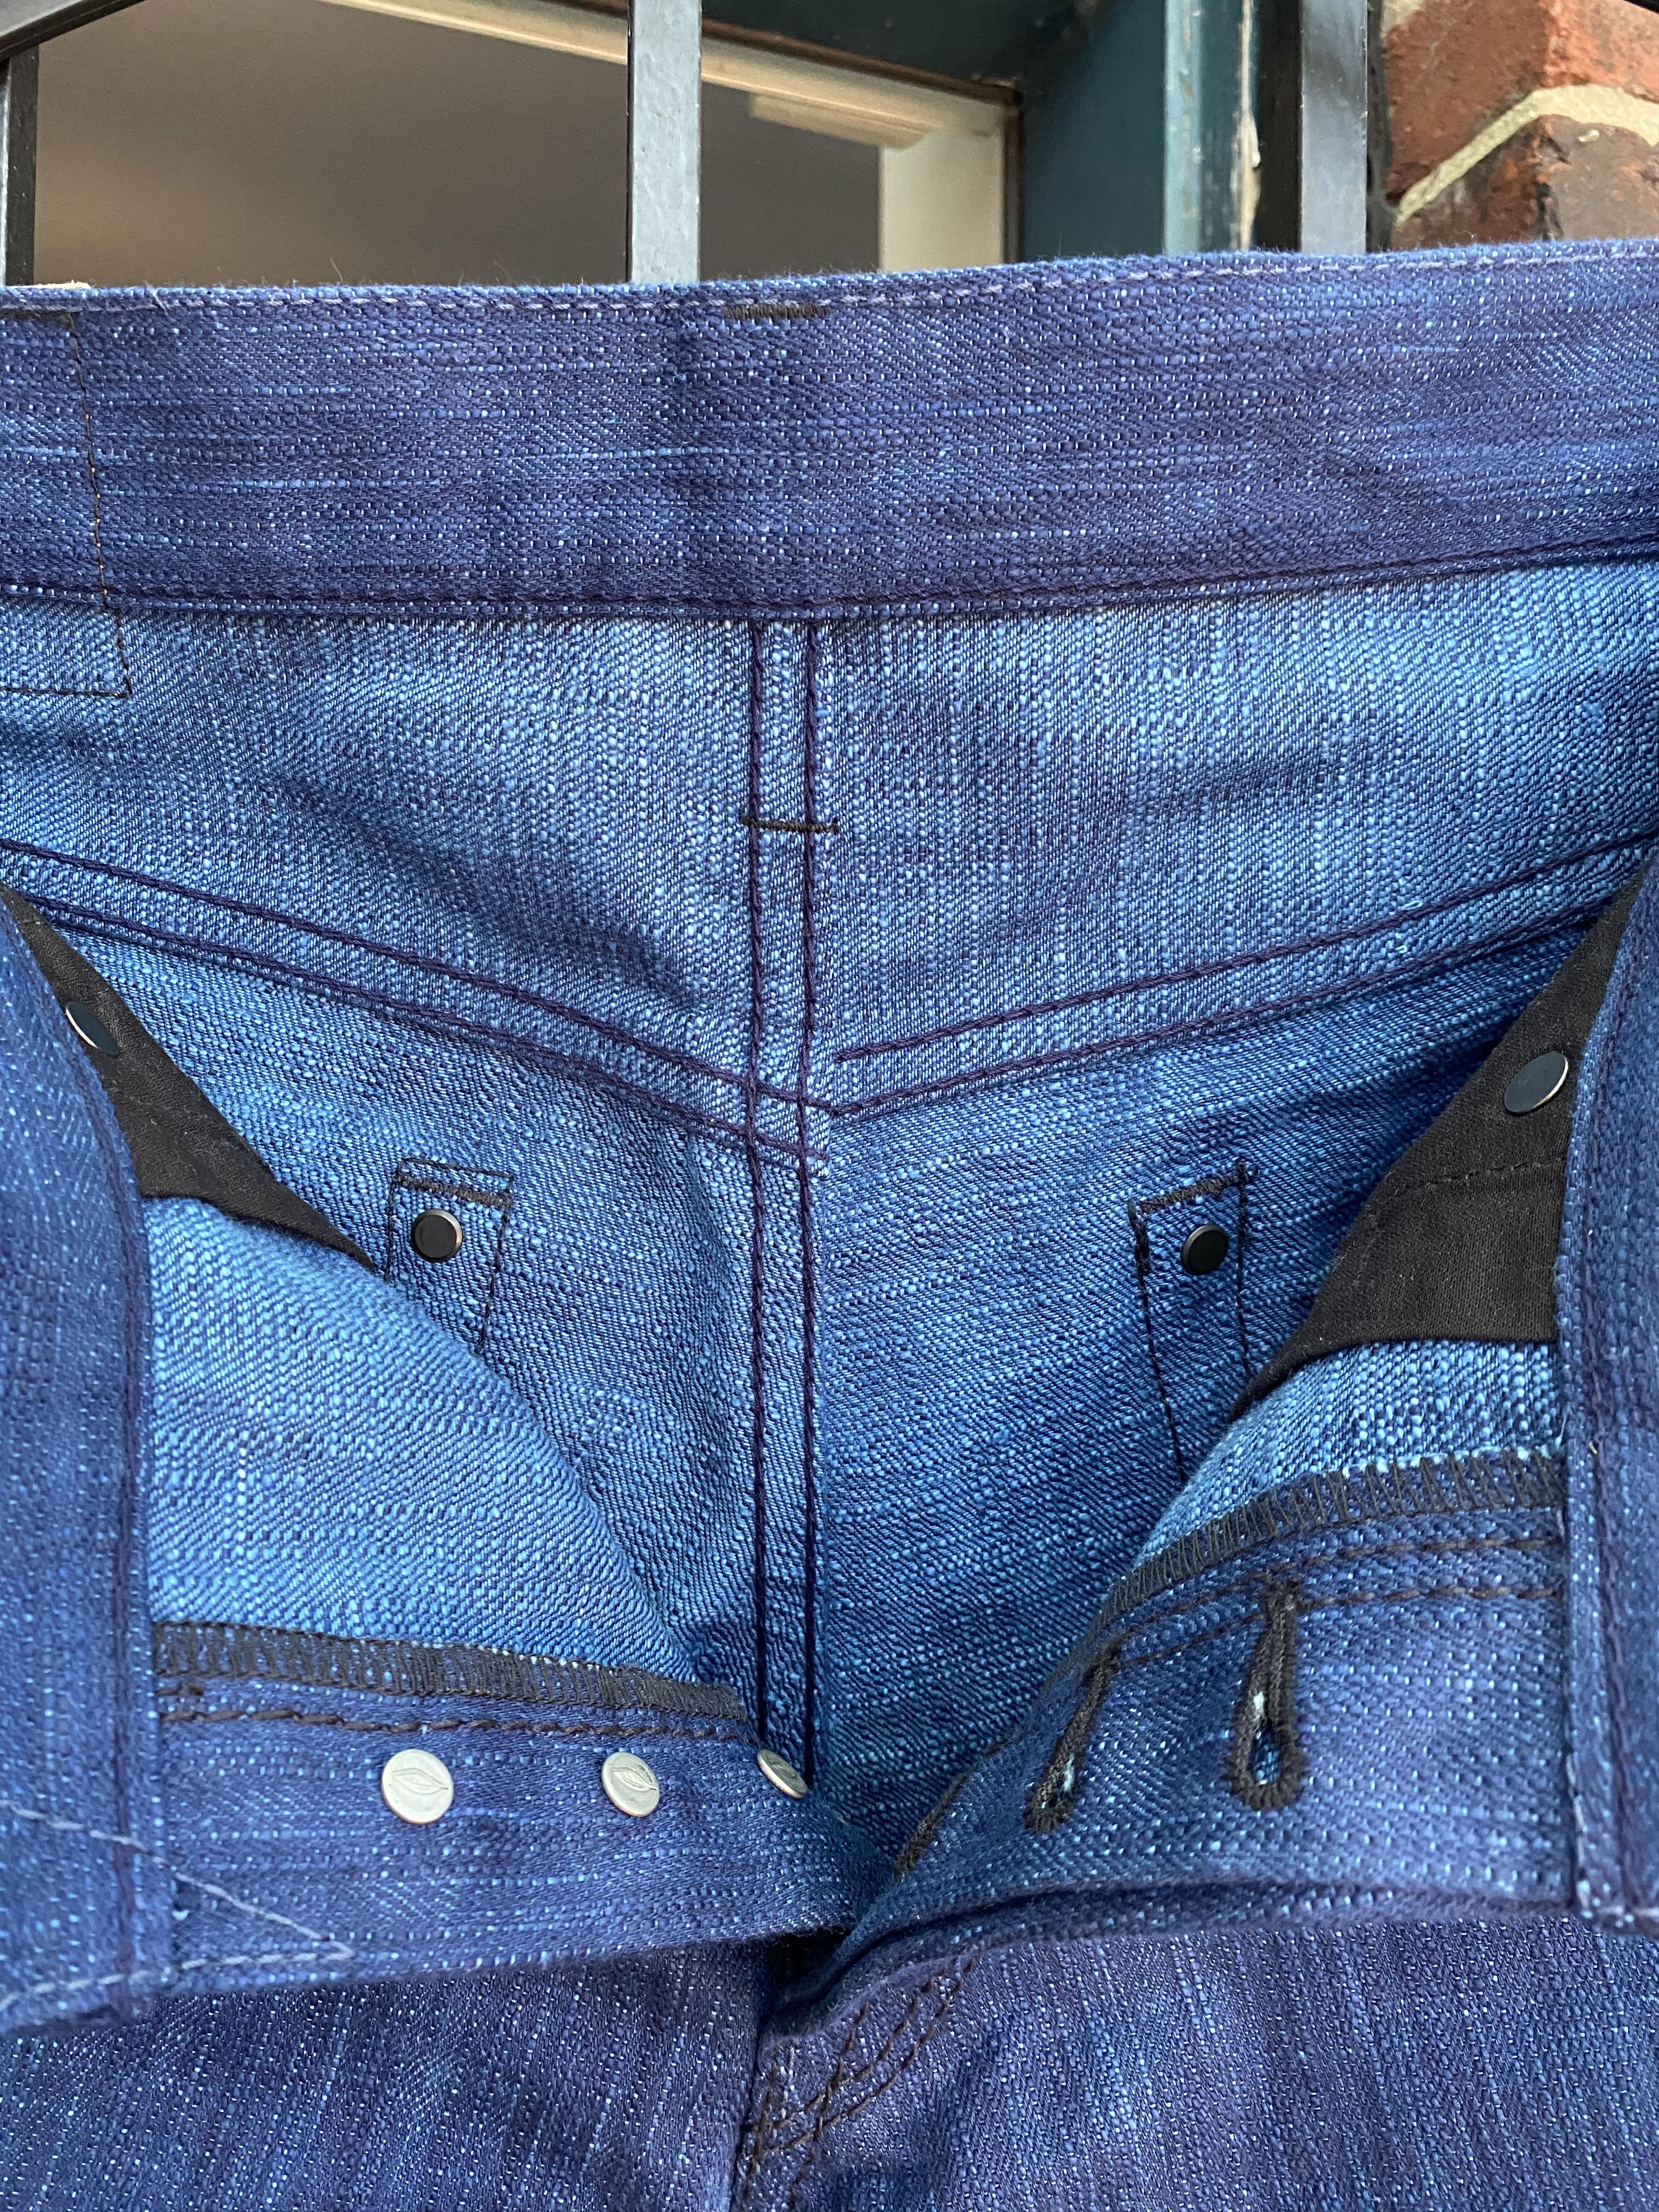 Pure Blue Japan Raw denim jeans Size US 34 / EU 50 - 9 Thumbnail